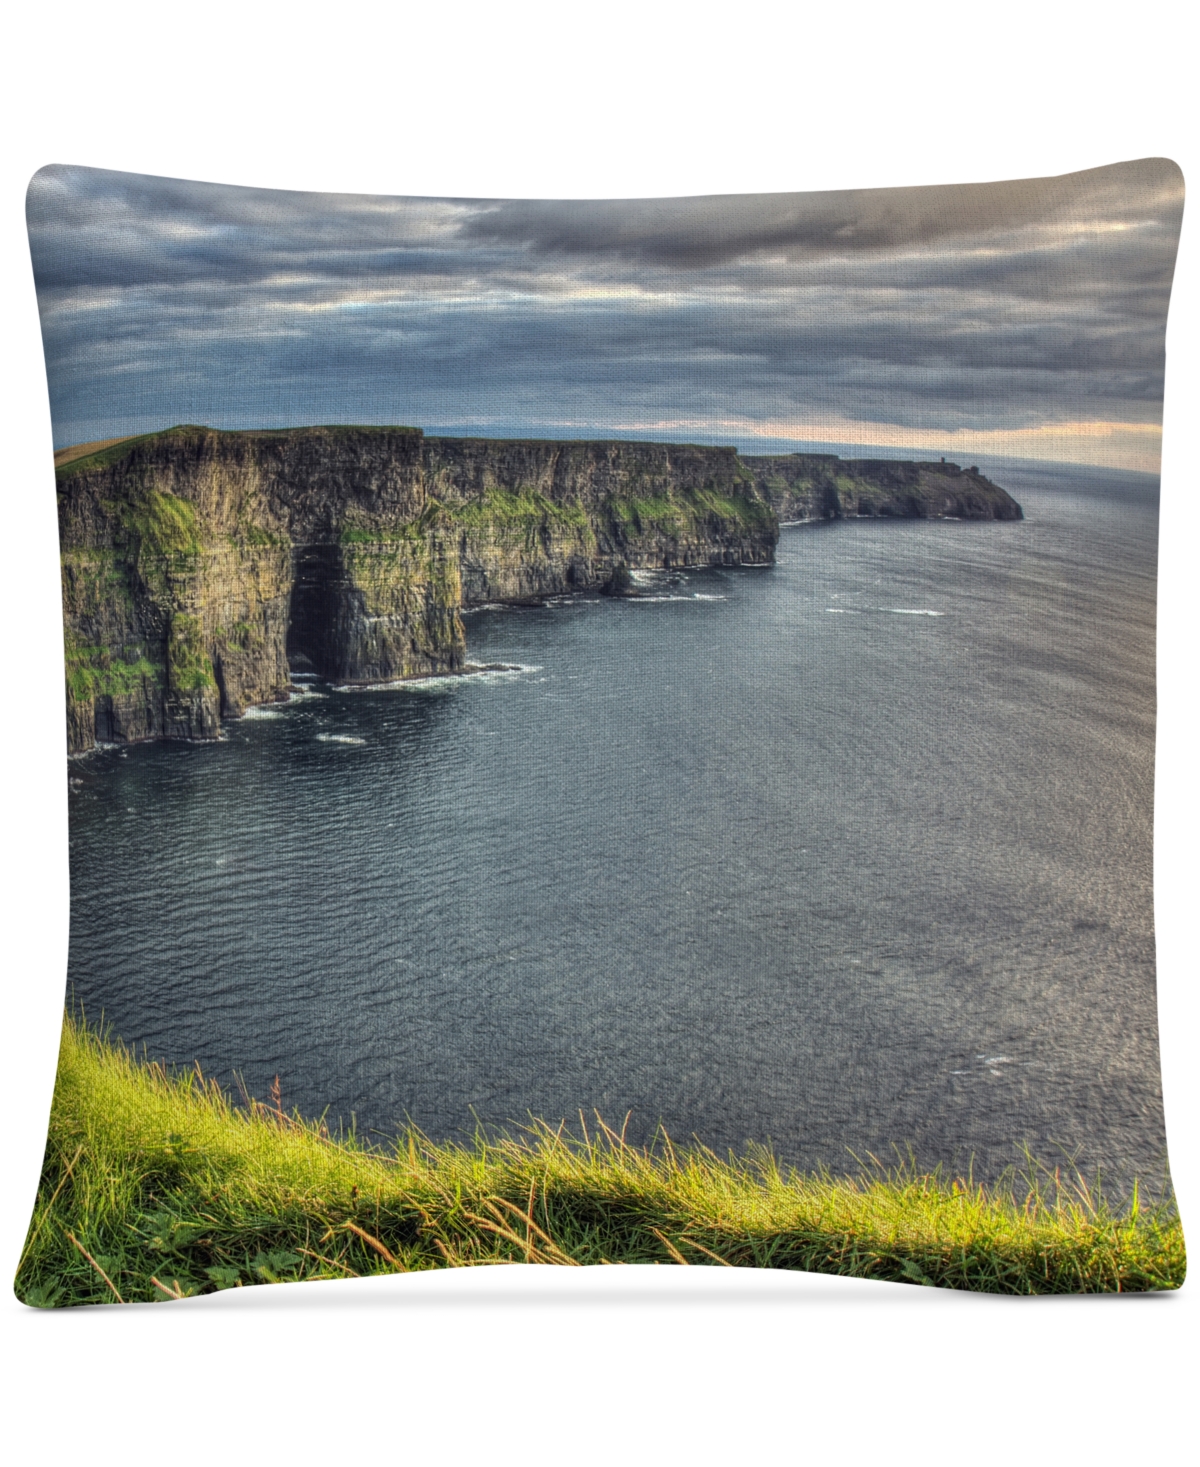 Pierre Leclerc Cliffs of Moher Ireland Decorative Pillow, 16 x 16